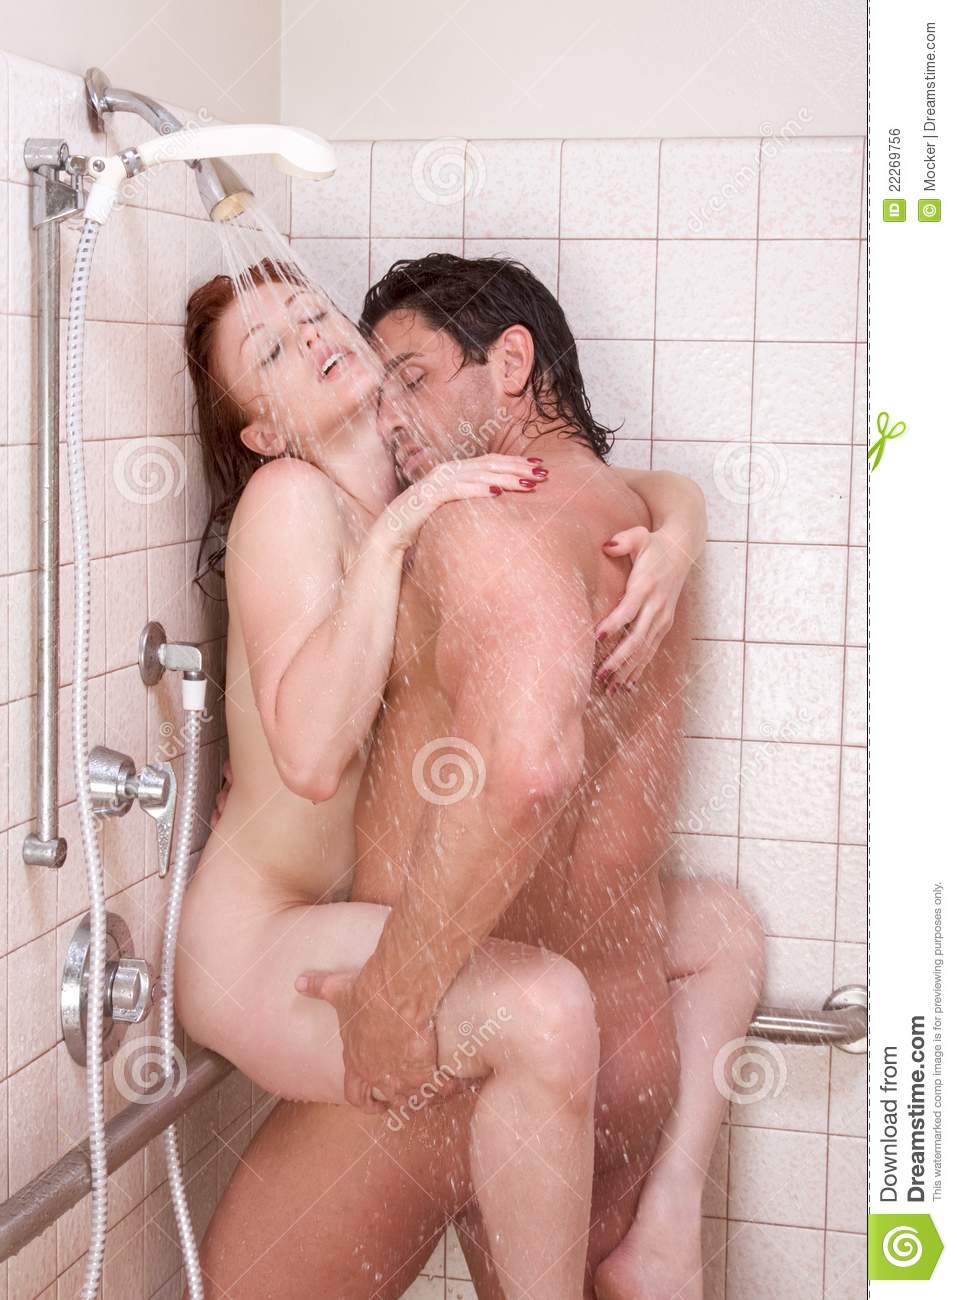 Best of Men and women having sex in the shower